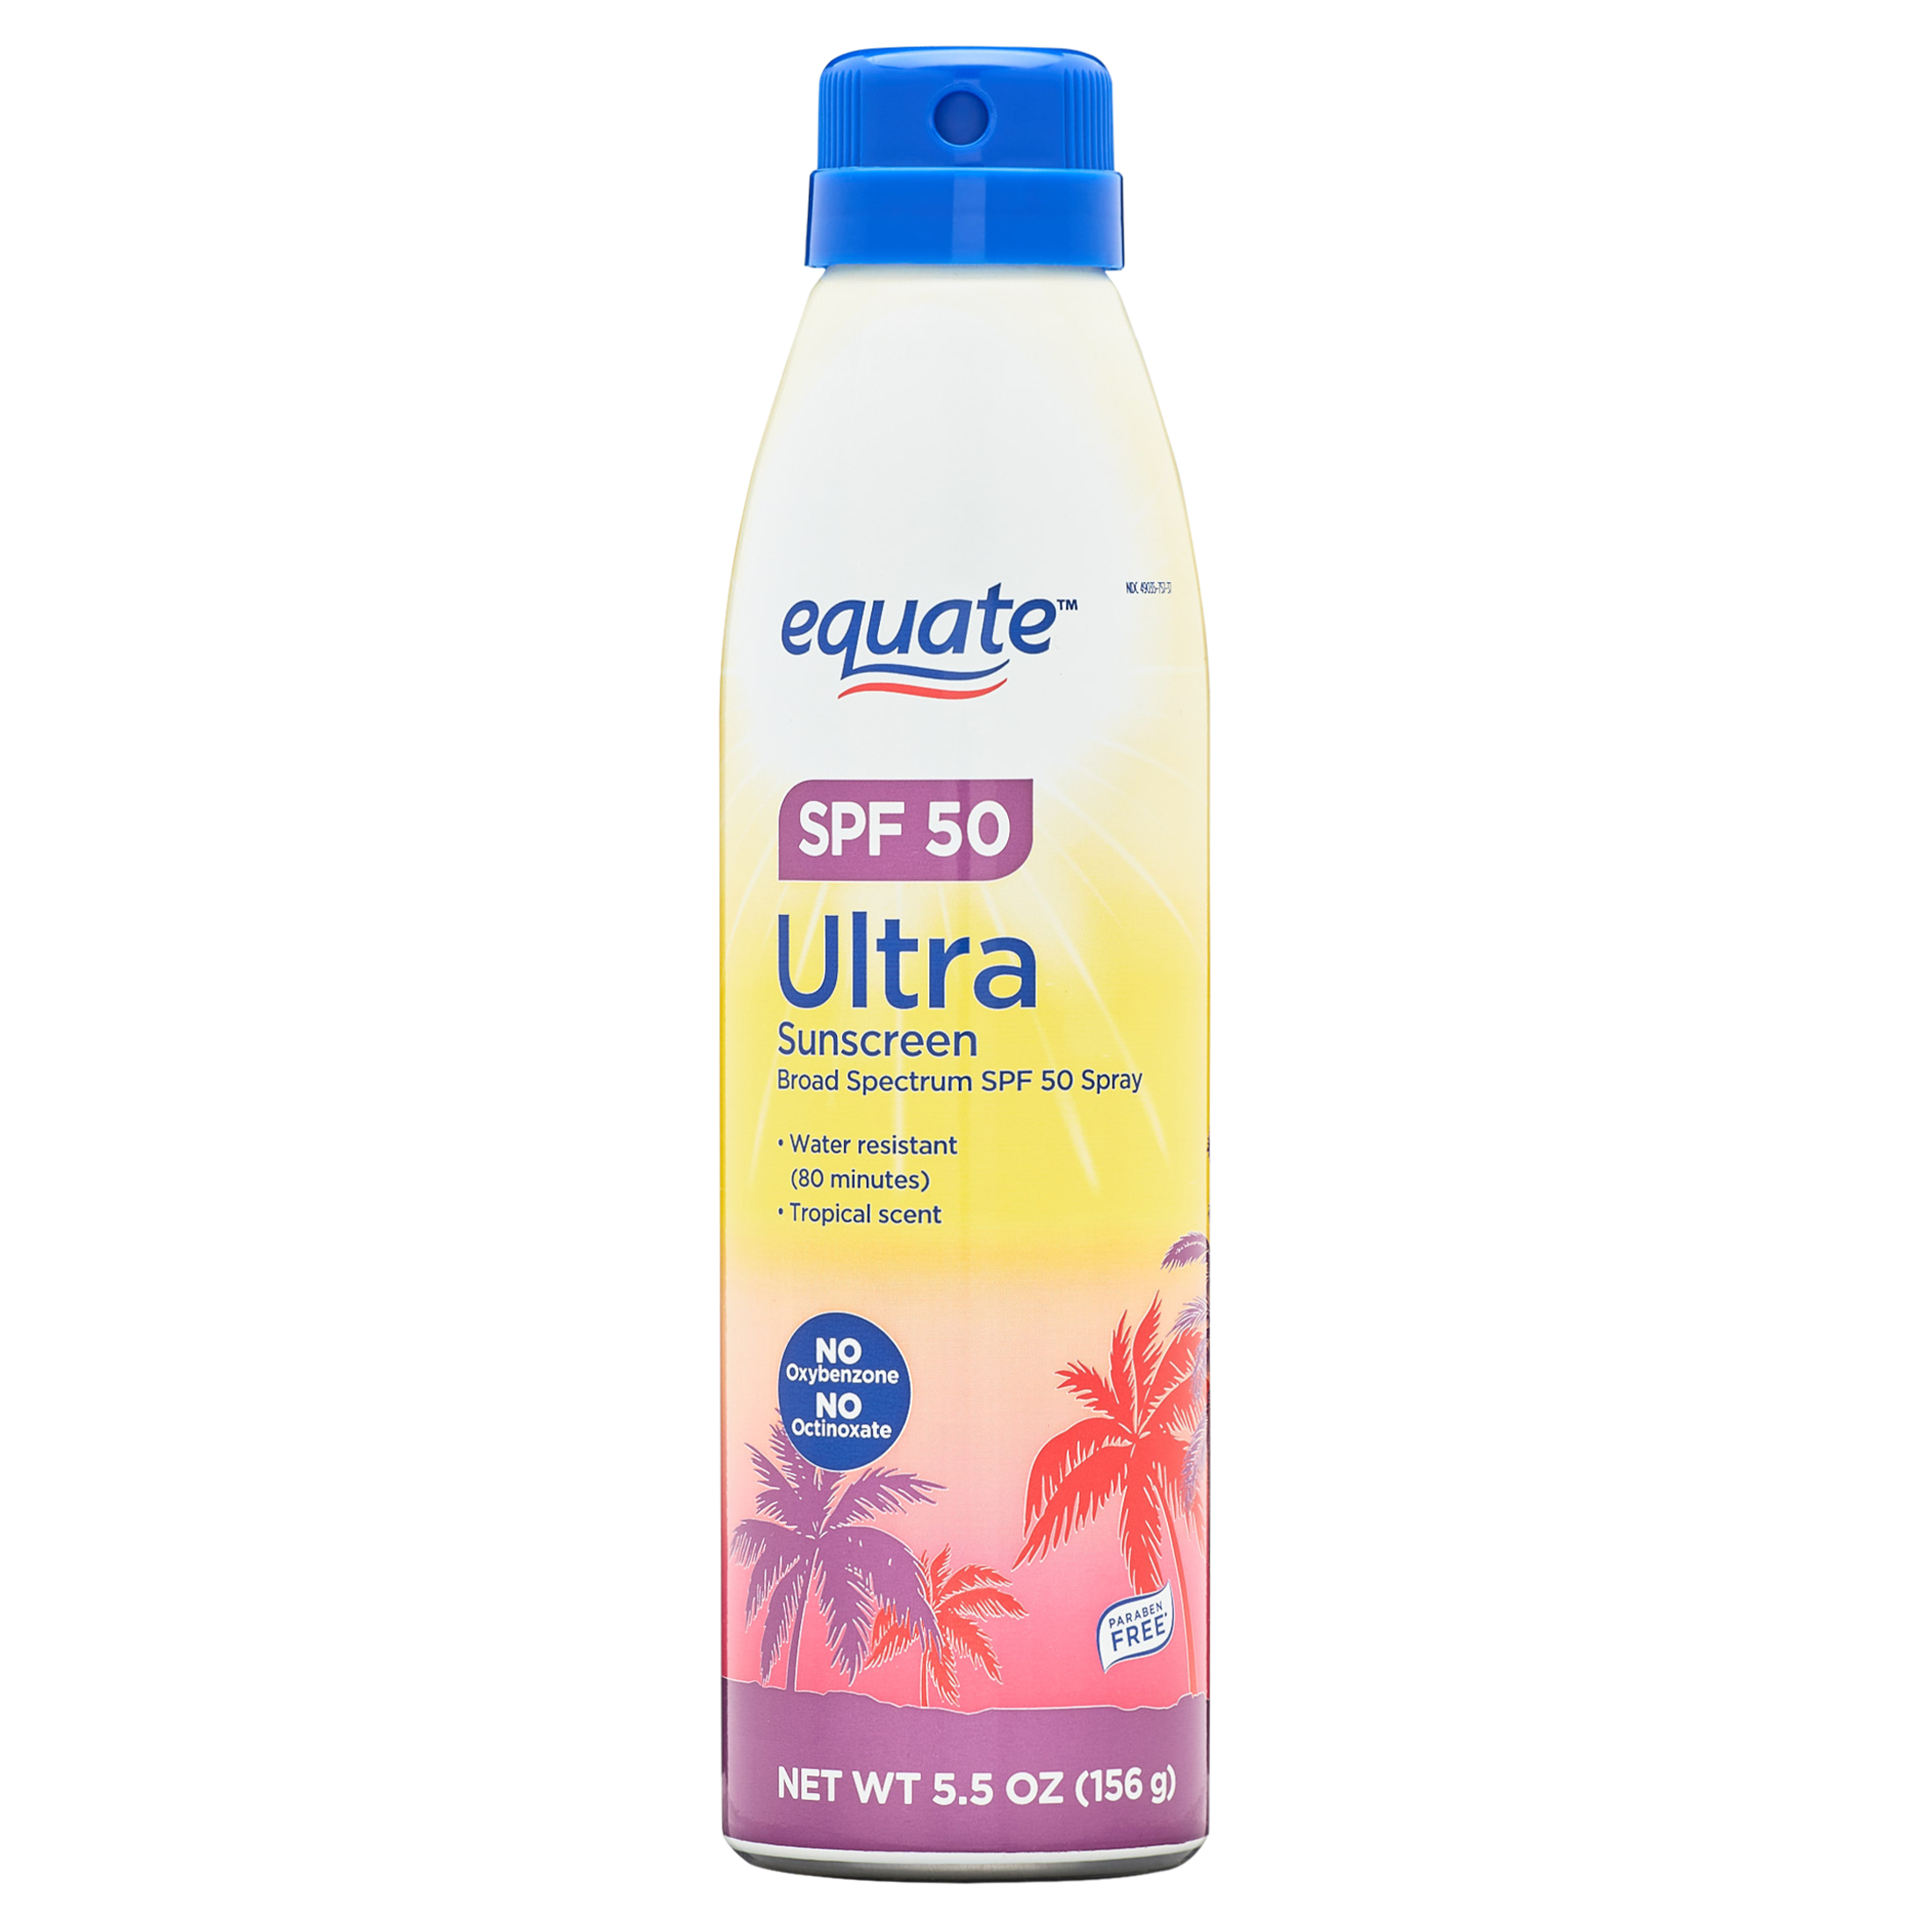 Equate Ultra Broad Spectrum Sunscreen Spray, SPF 50, 5.5 oz - image 1 of 8